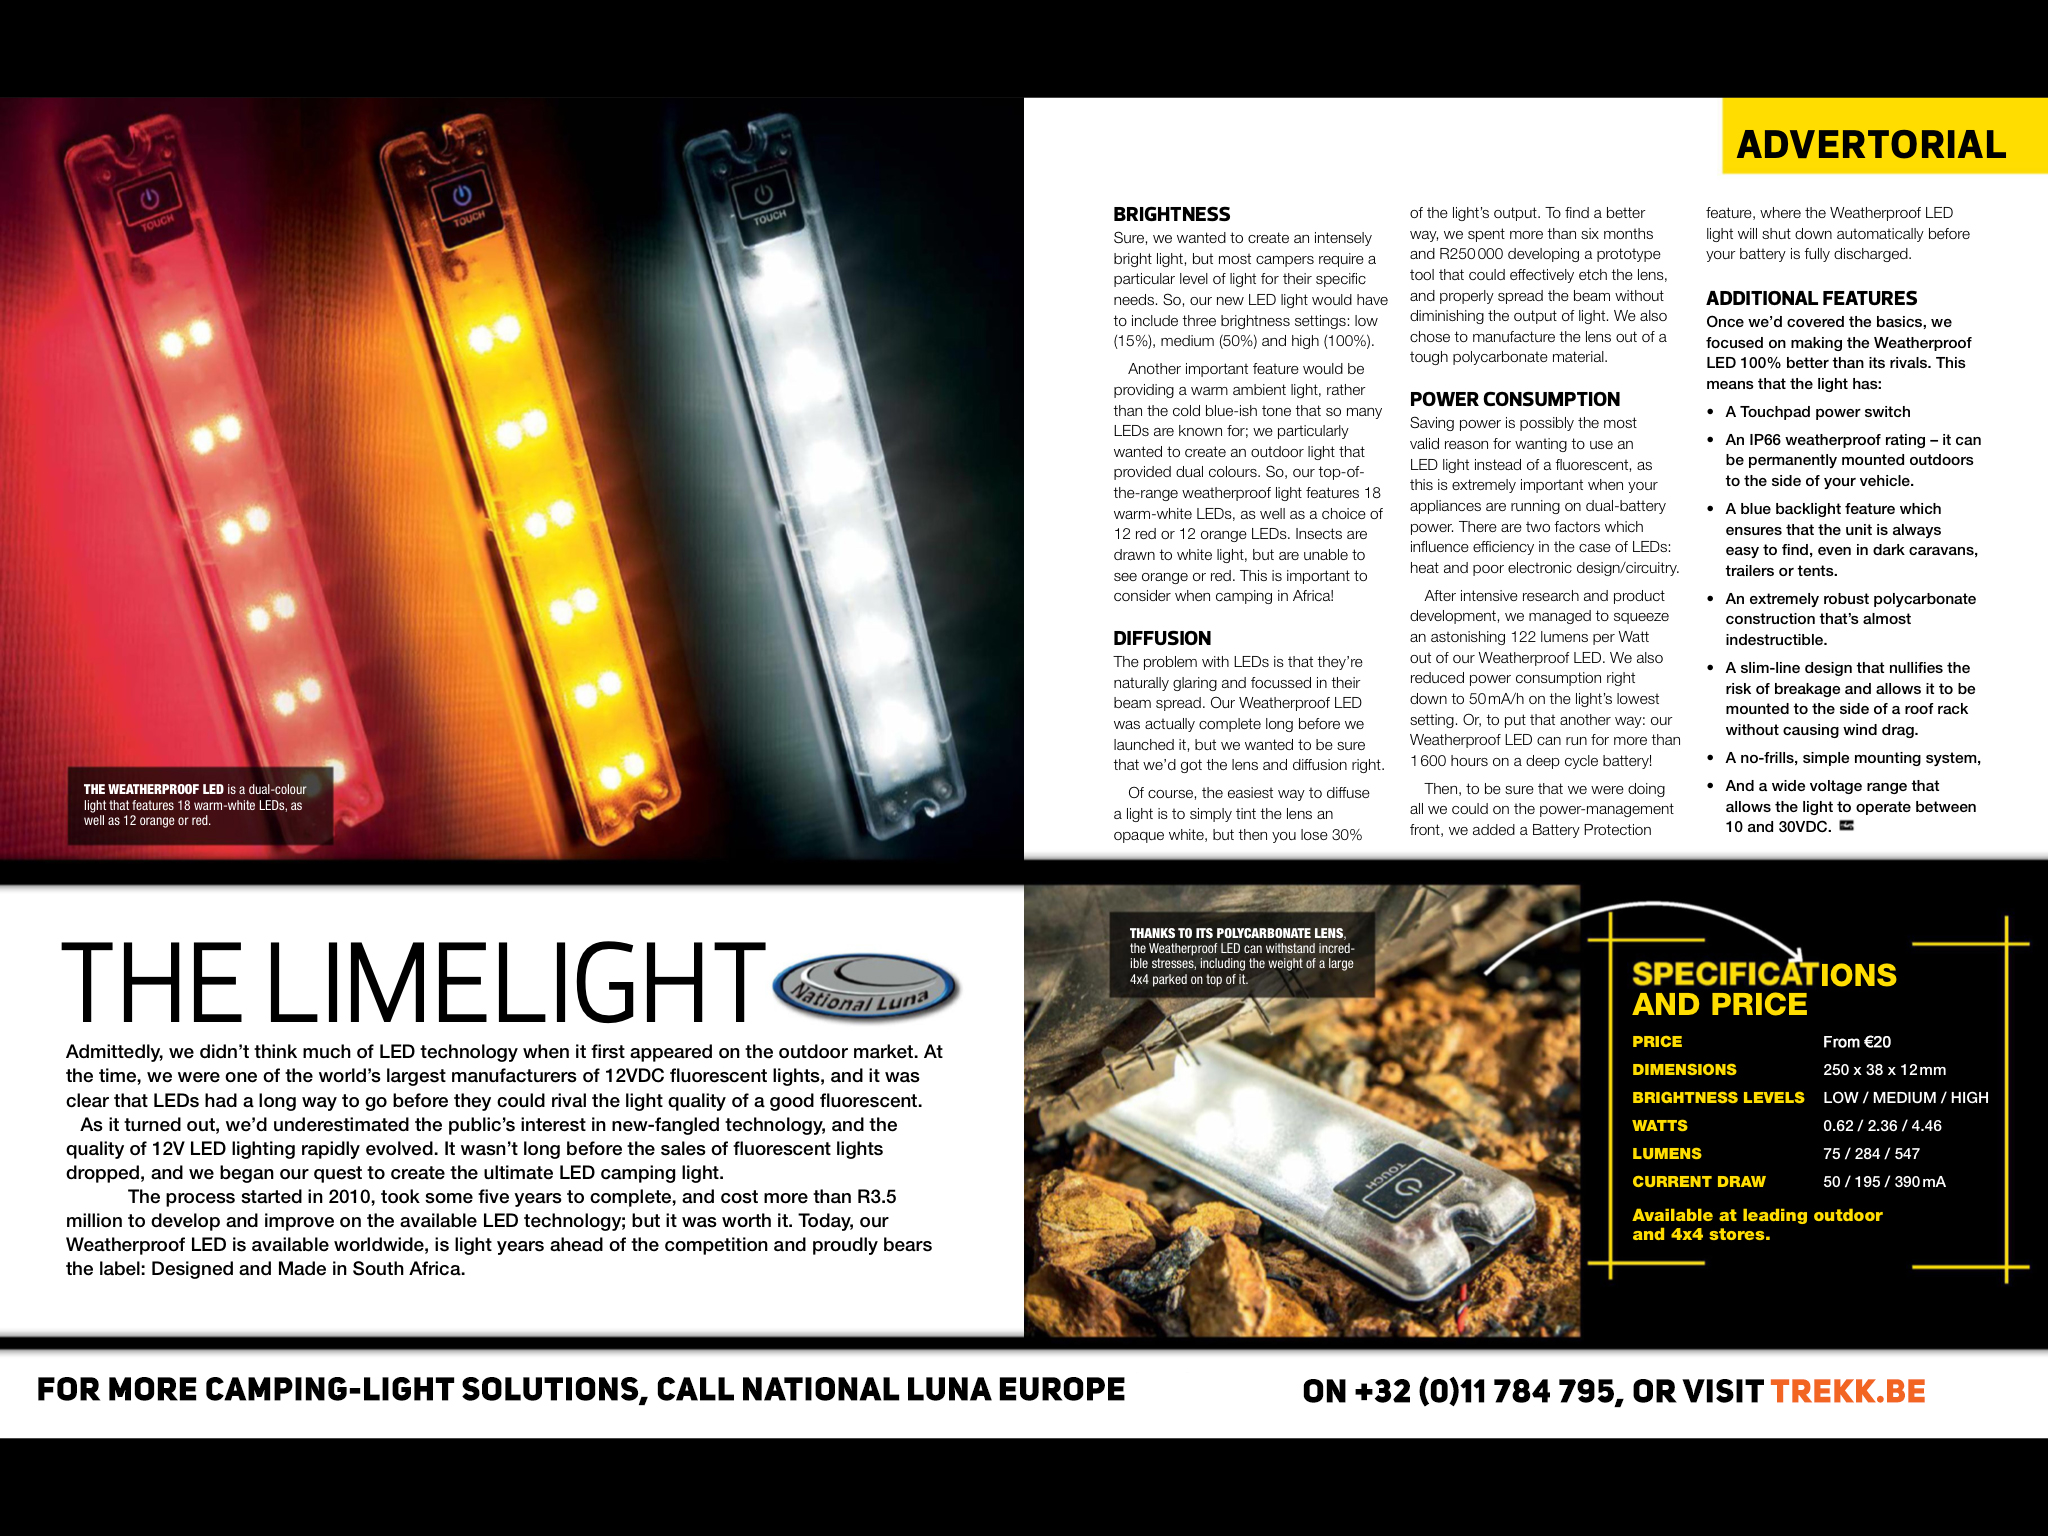 Creating the ultimate 12V LED camping light - National Luna